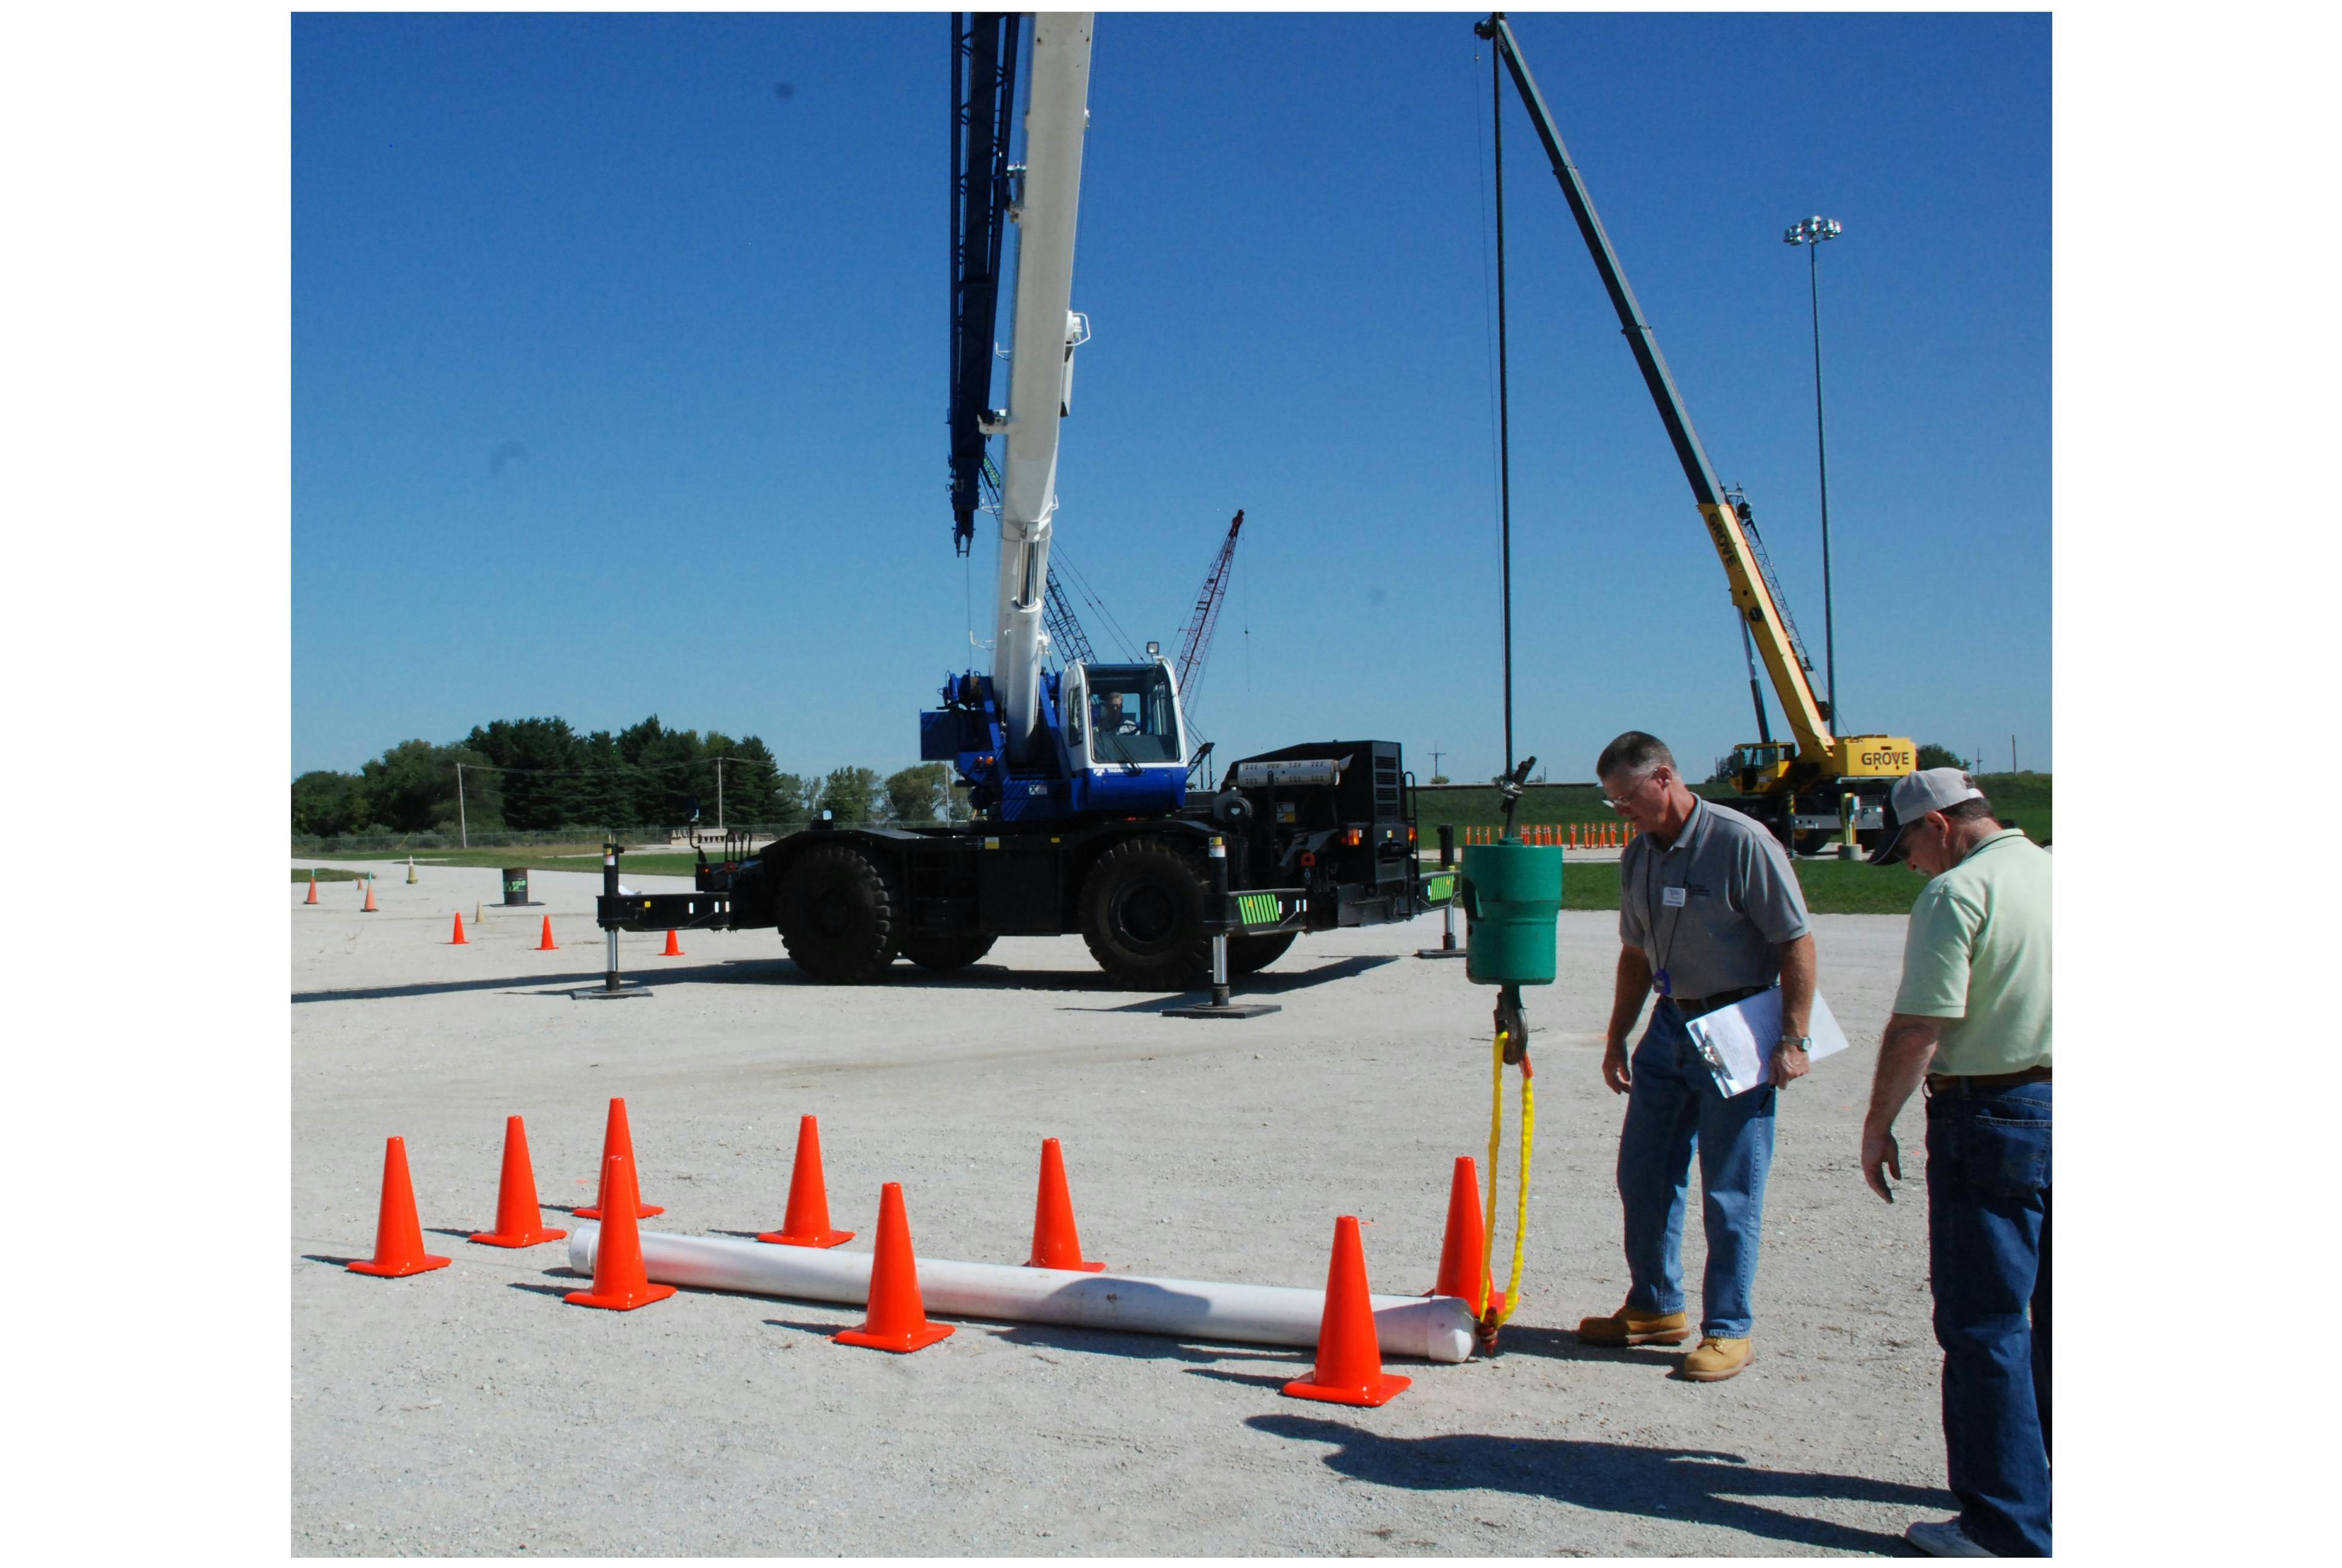 Crane Operators Test Skills at Regional Rodeos